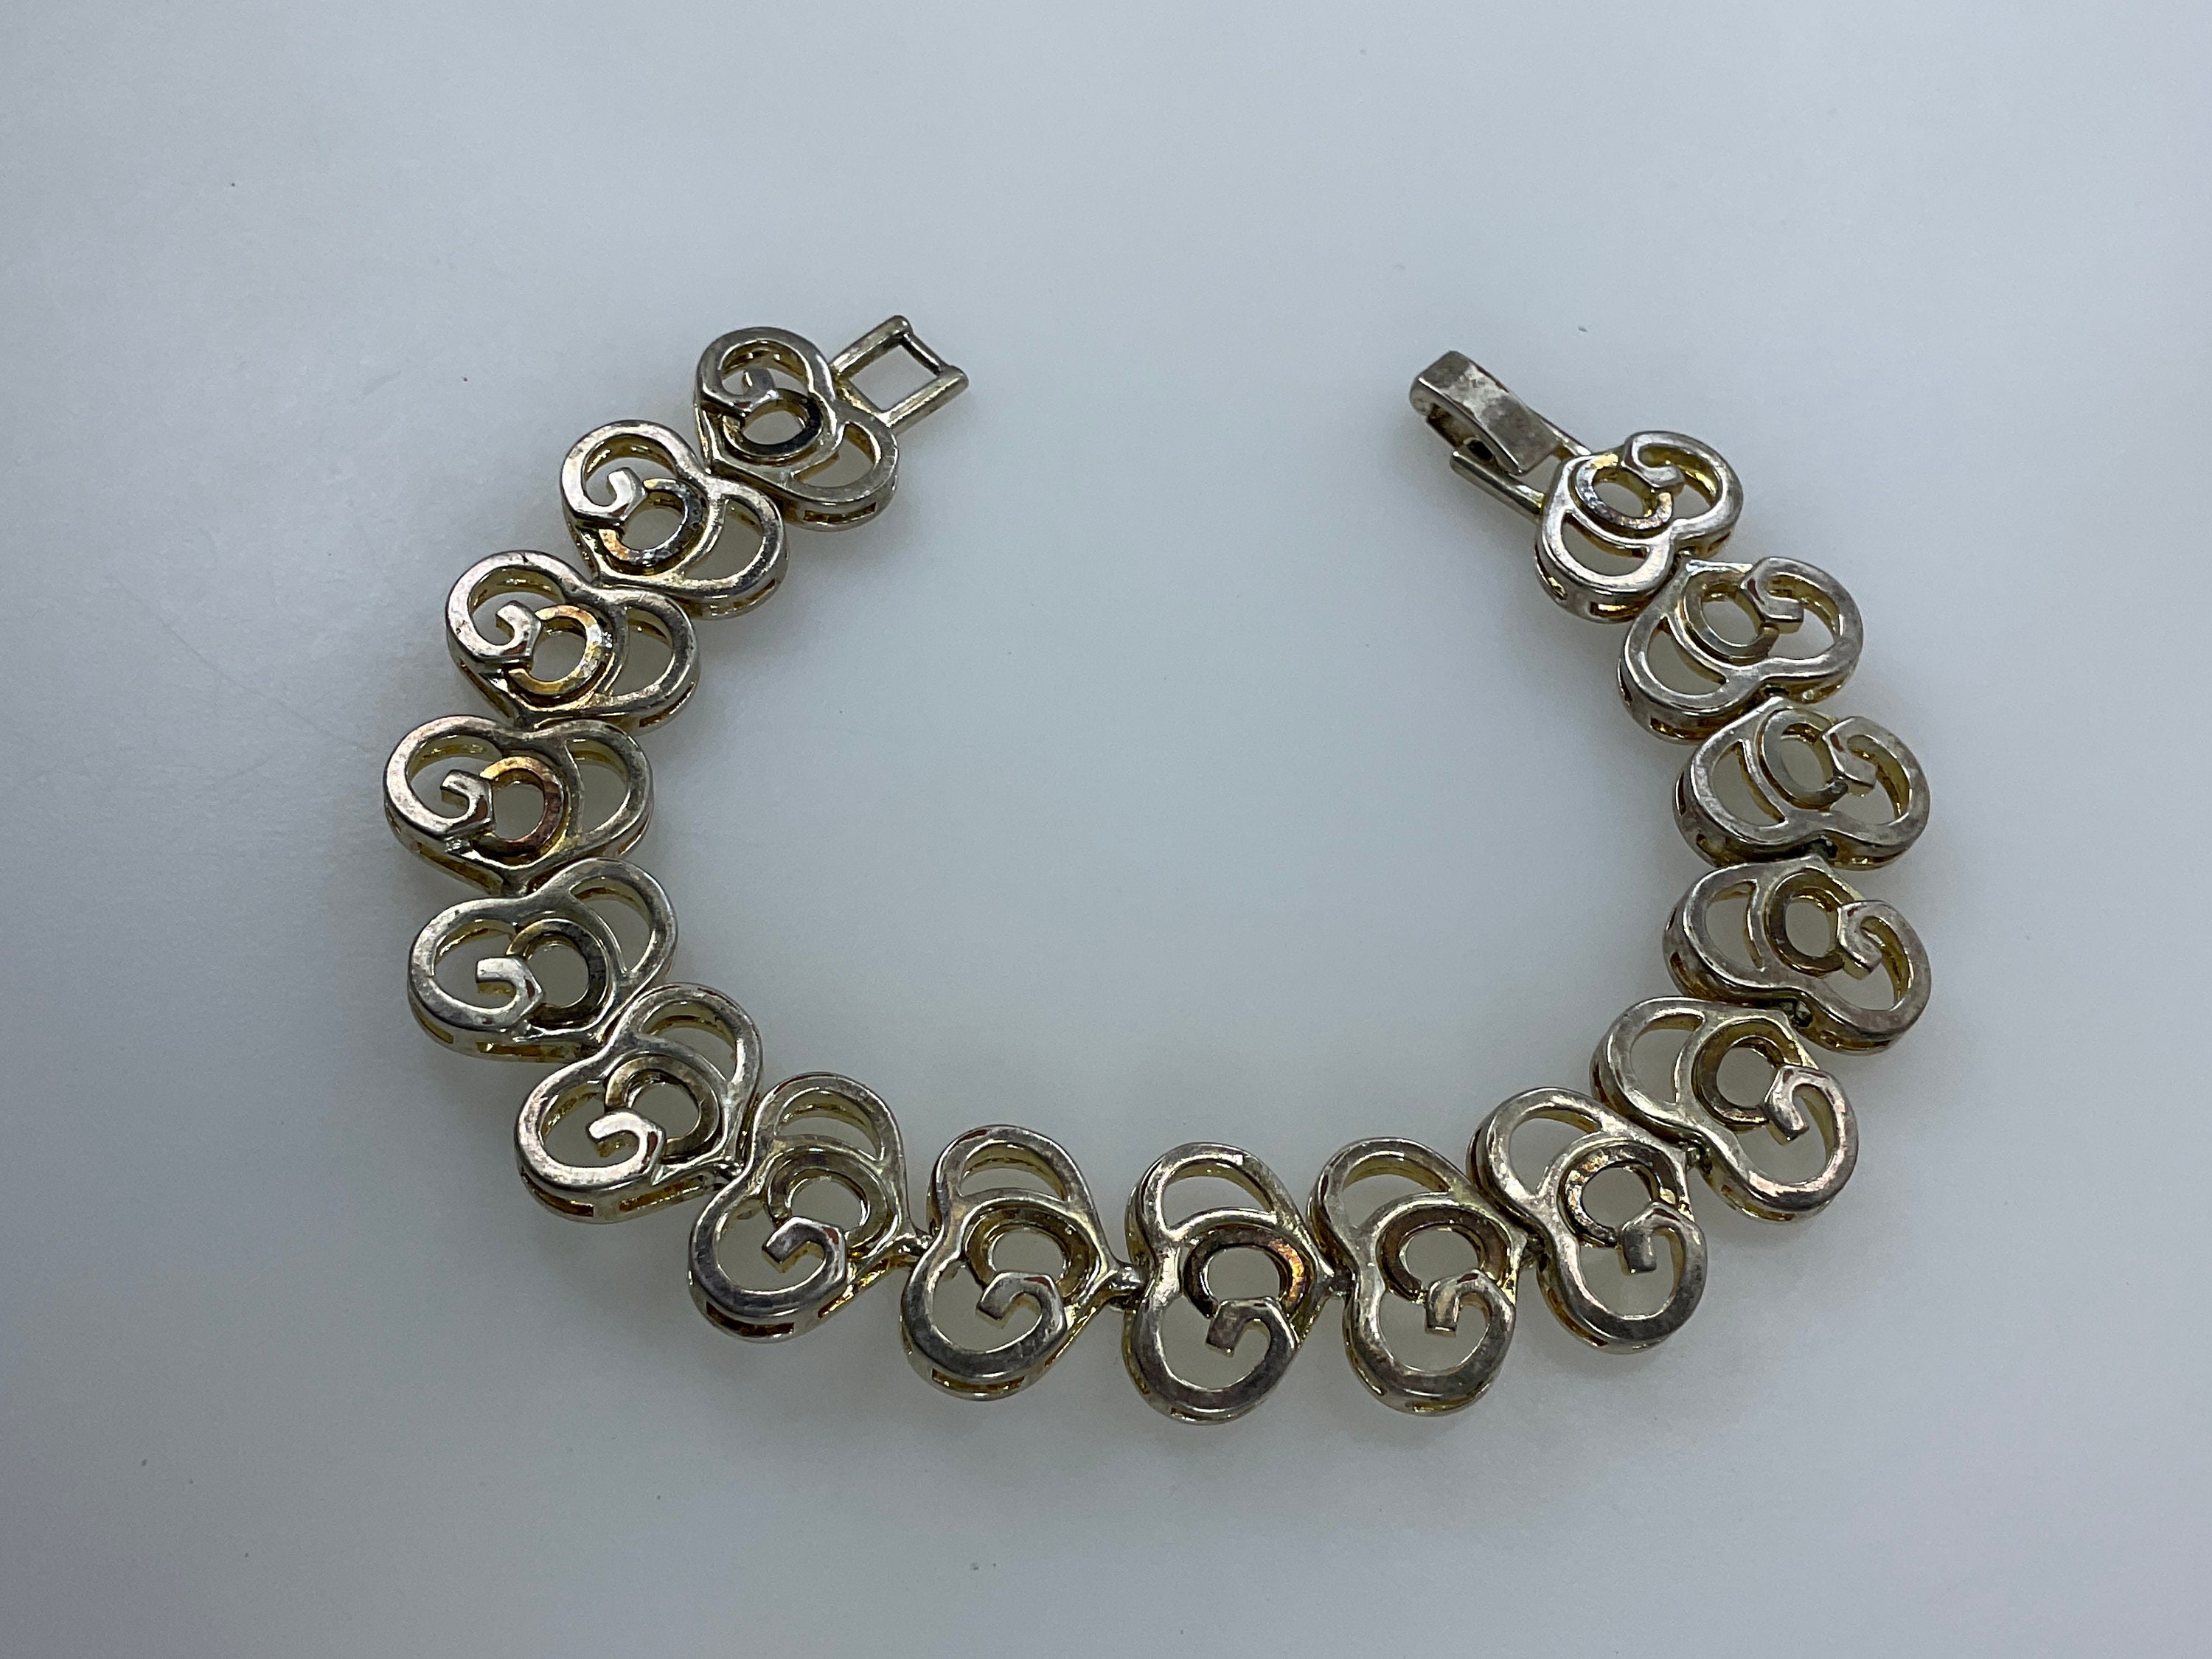 Bracelet Bender - SJ Jewelry Supply